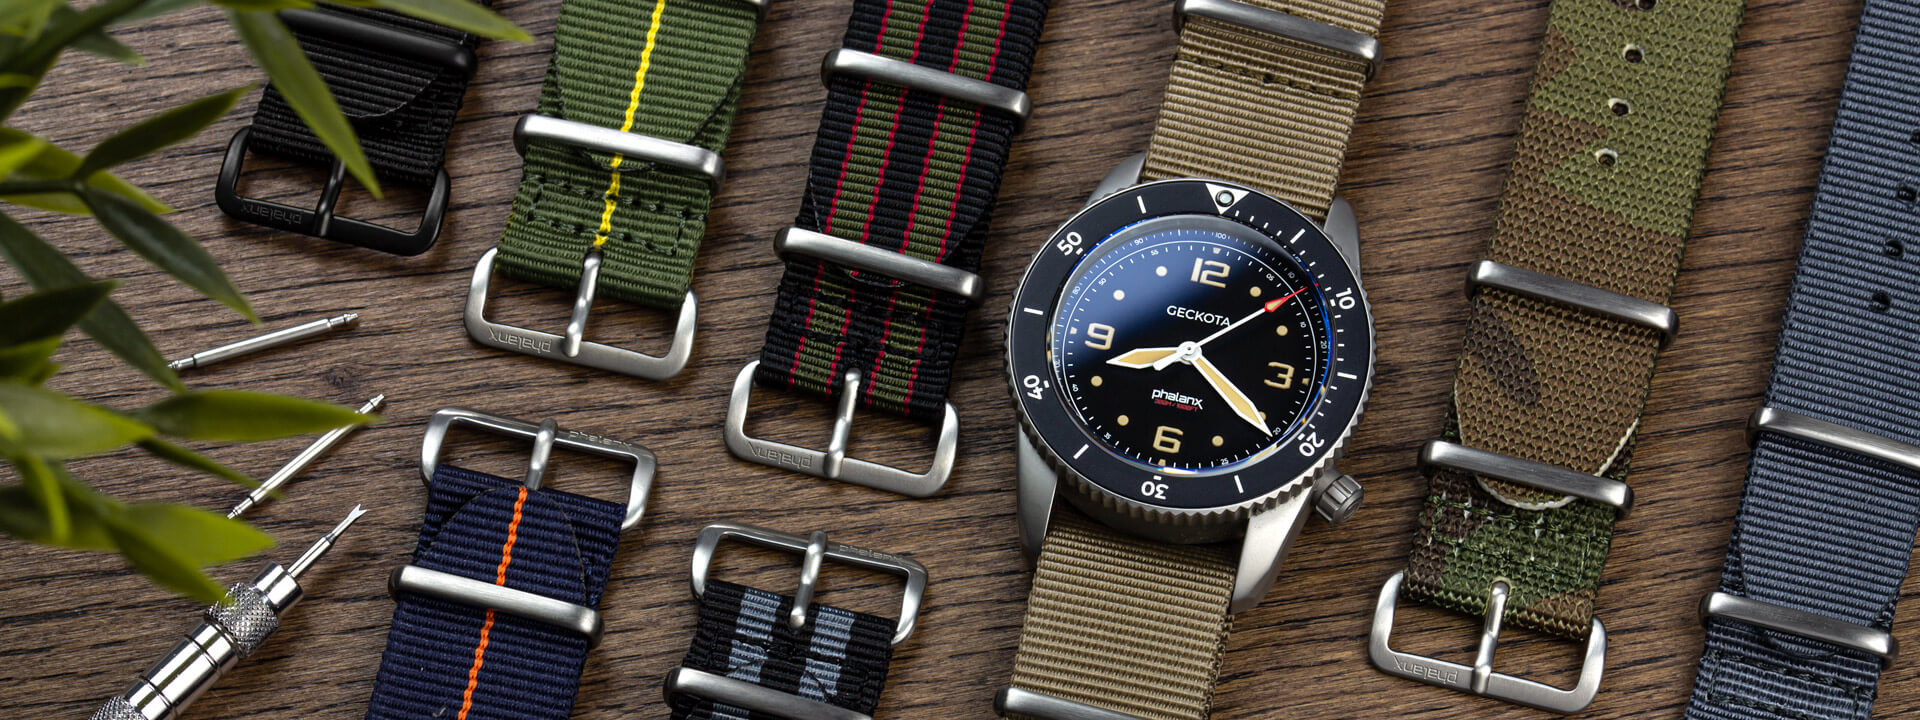 Geckota NATO watch straps